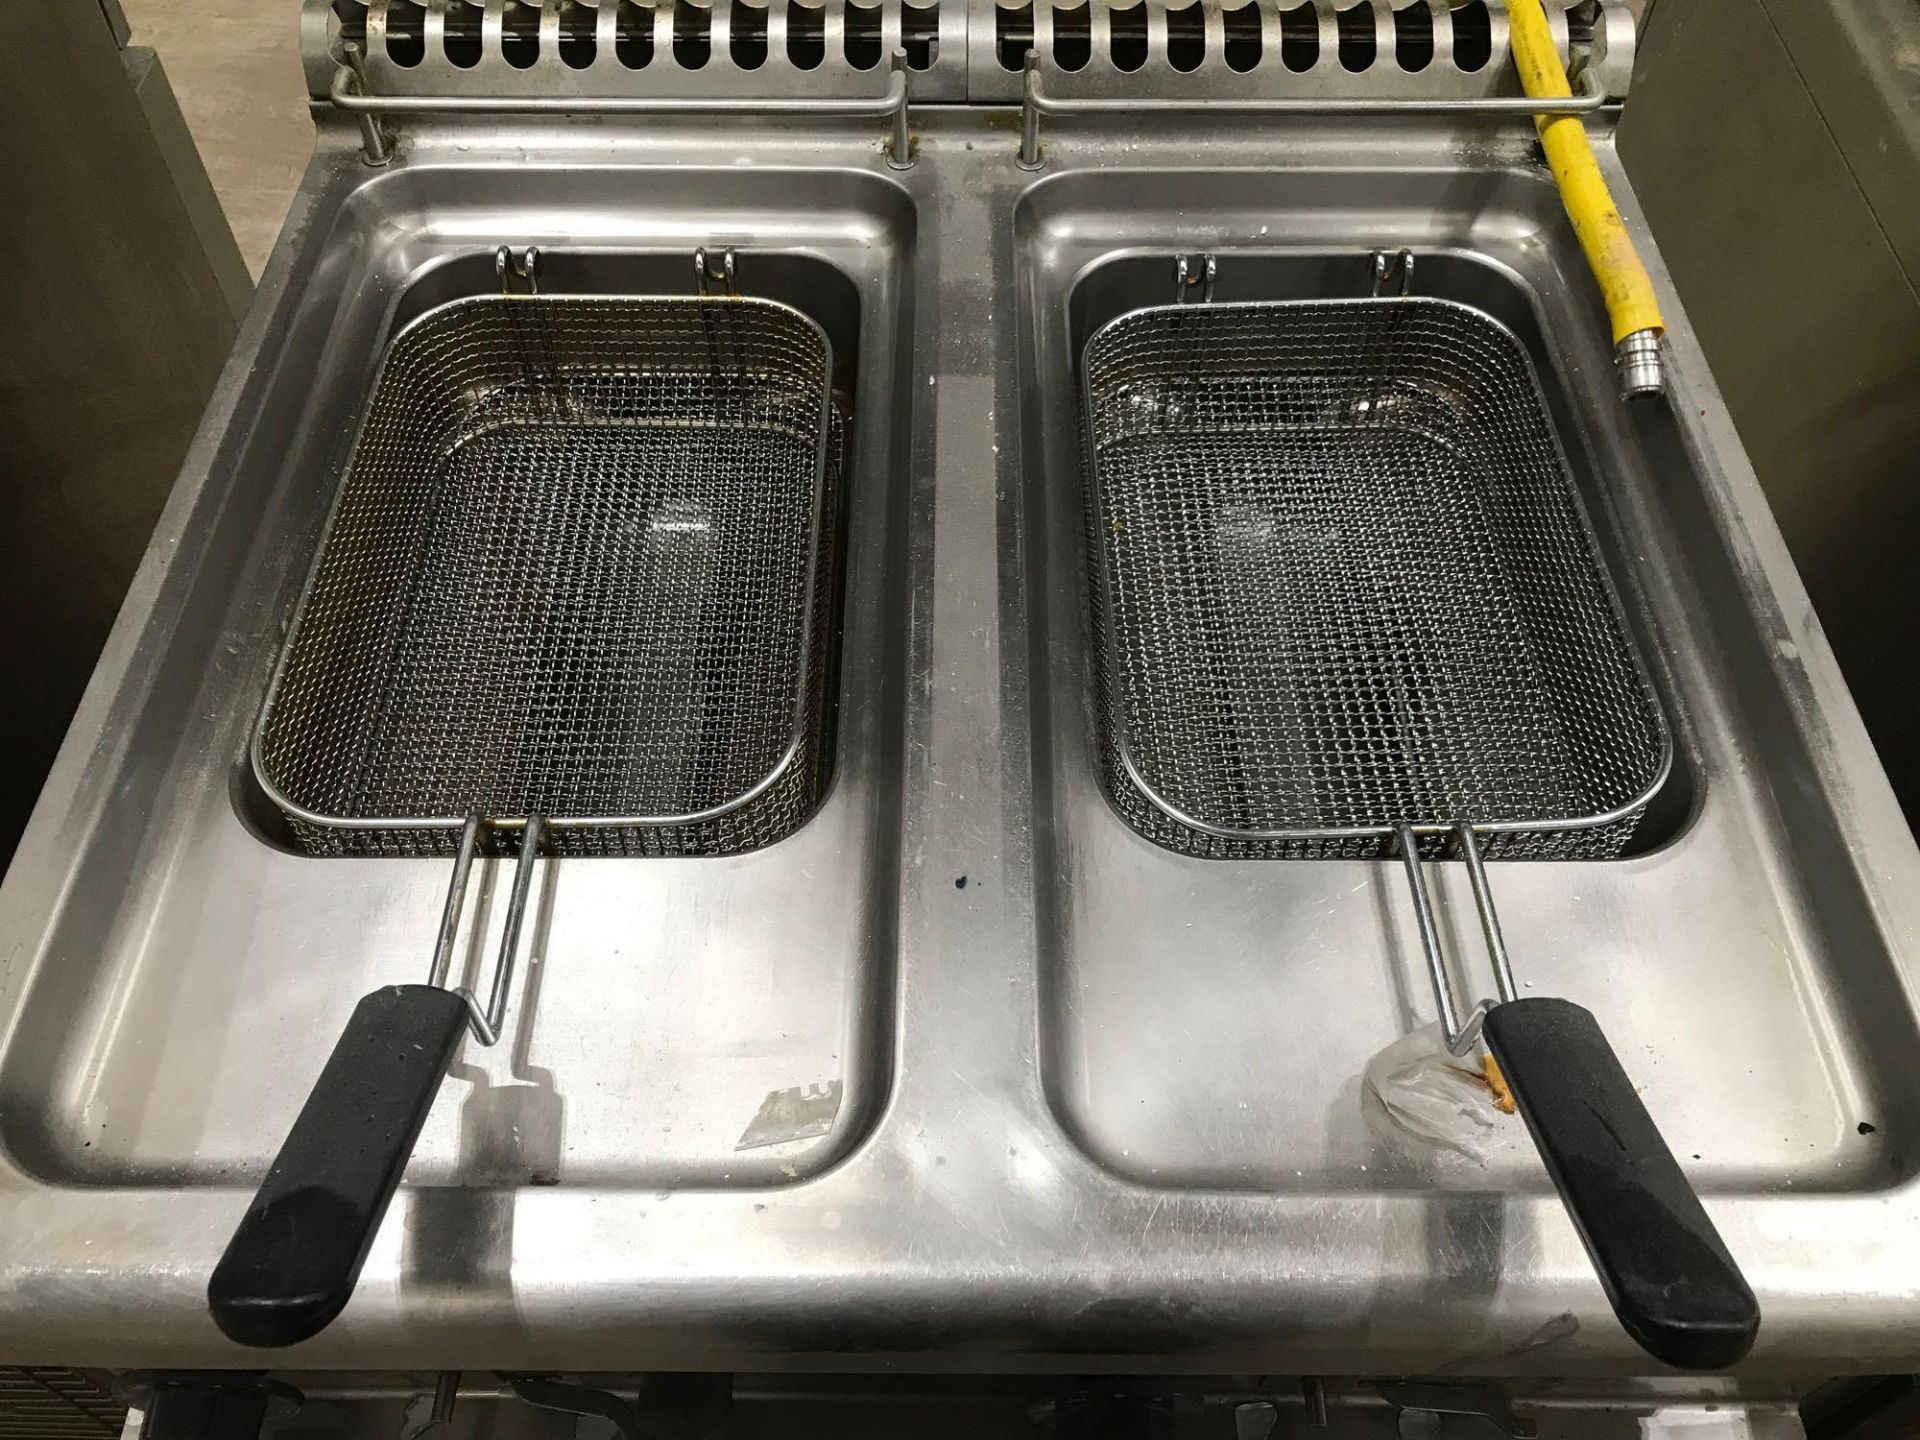 Electrolux twin fryer - Image 2 of 4